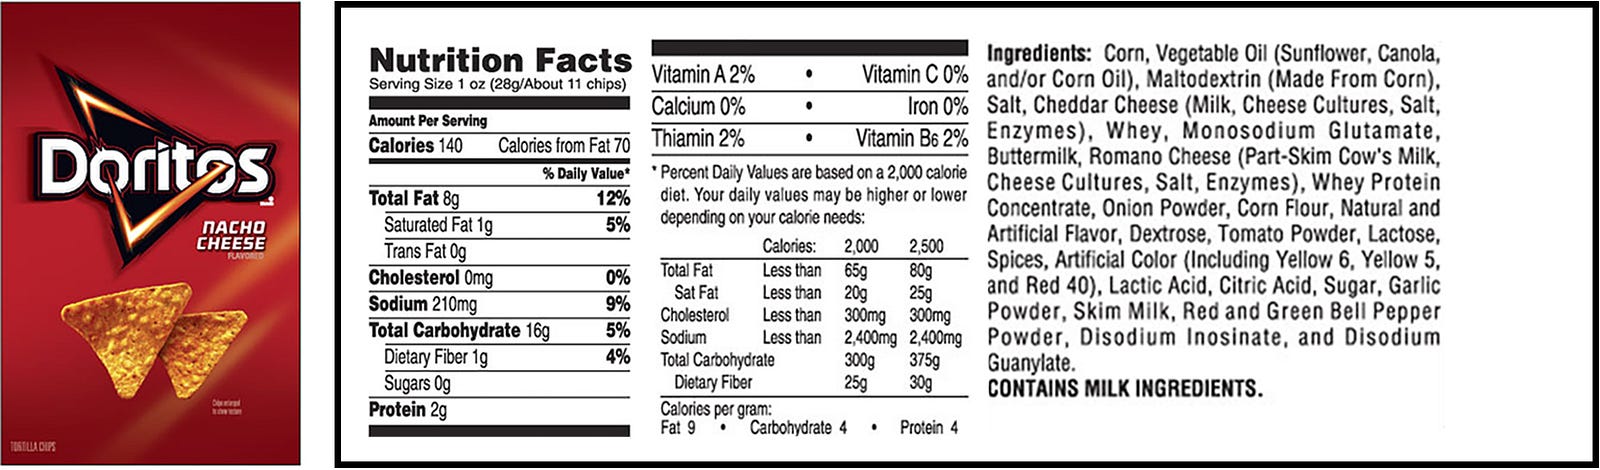 Doritos Chips Nacho Cheese Nutrition Bag Label Tortilla Facts Ingredients C...